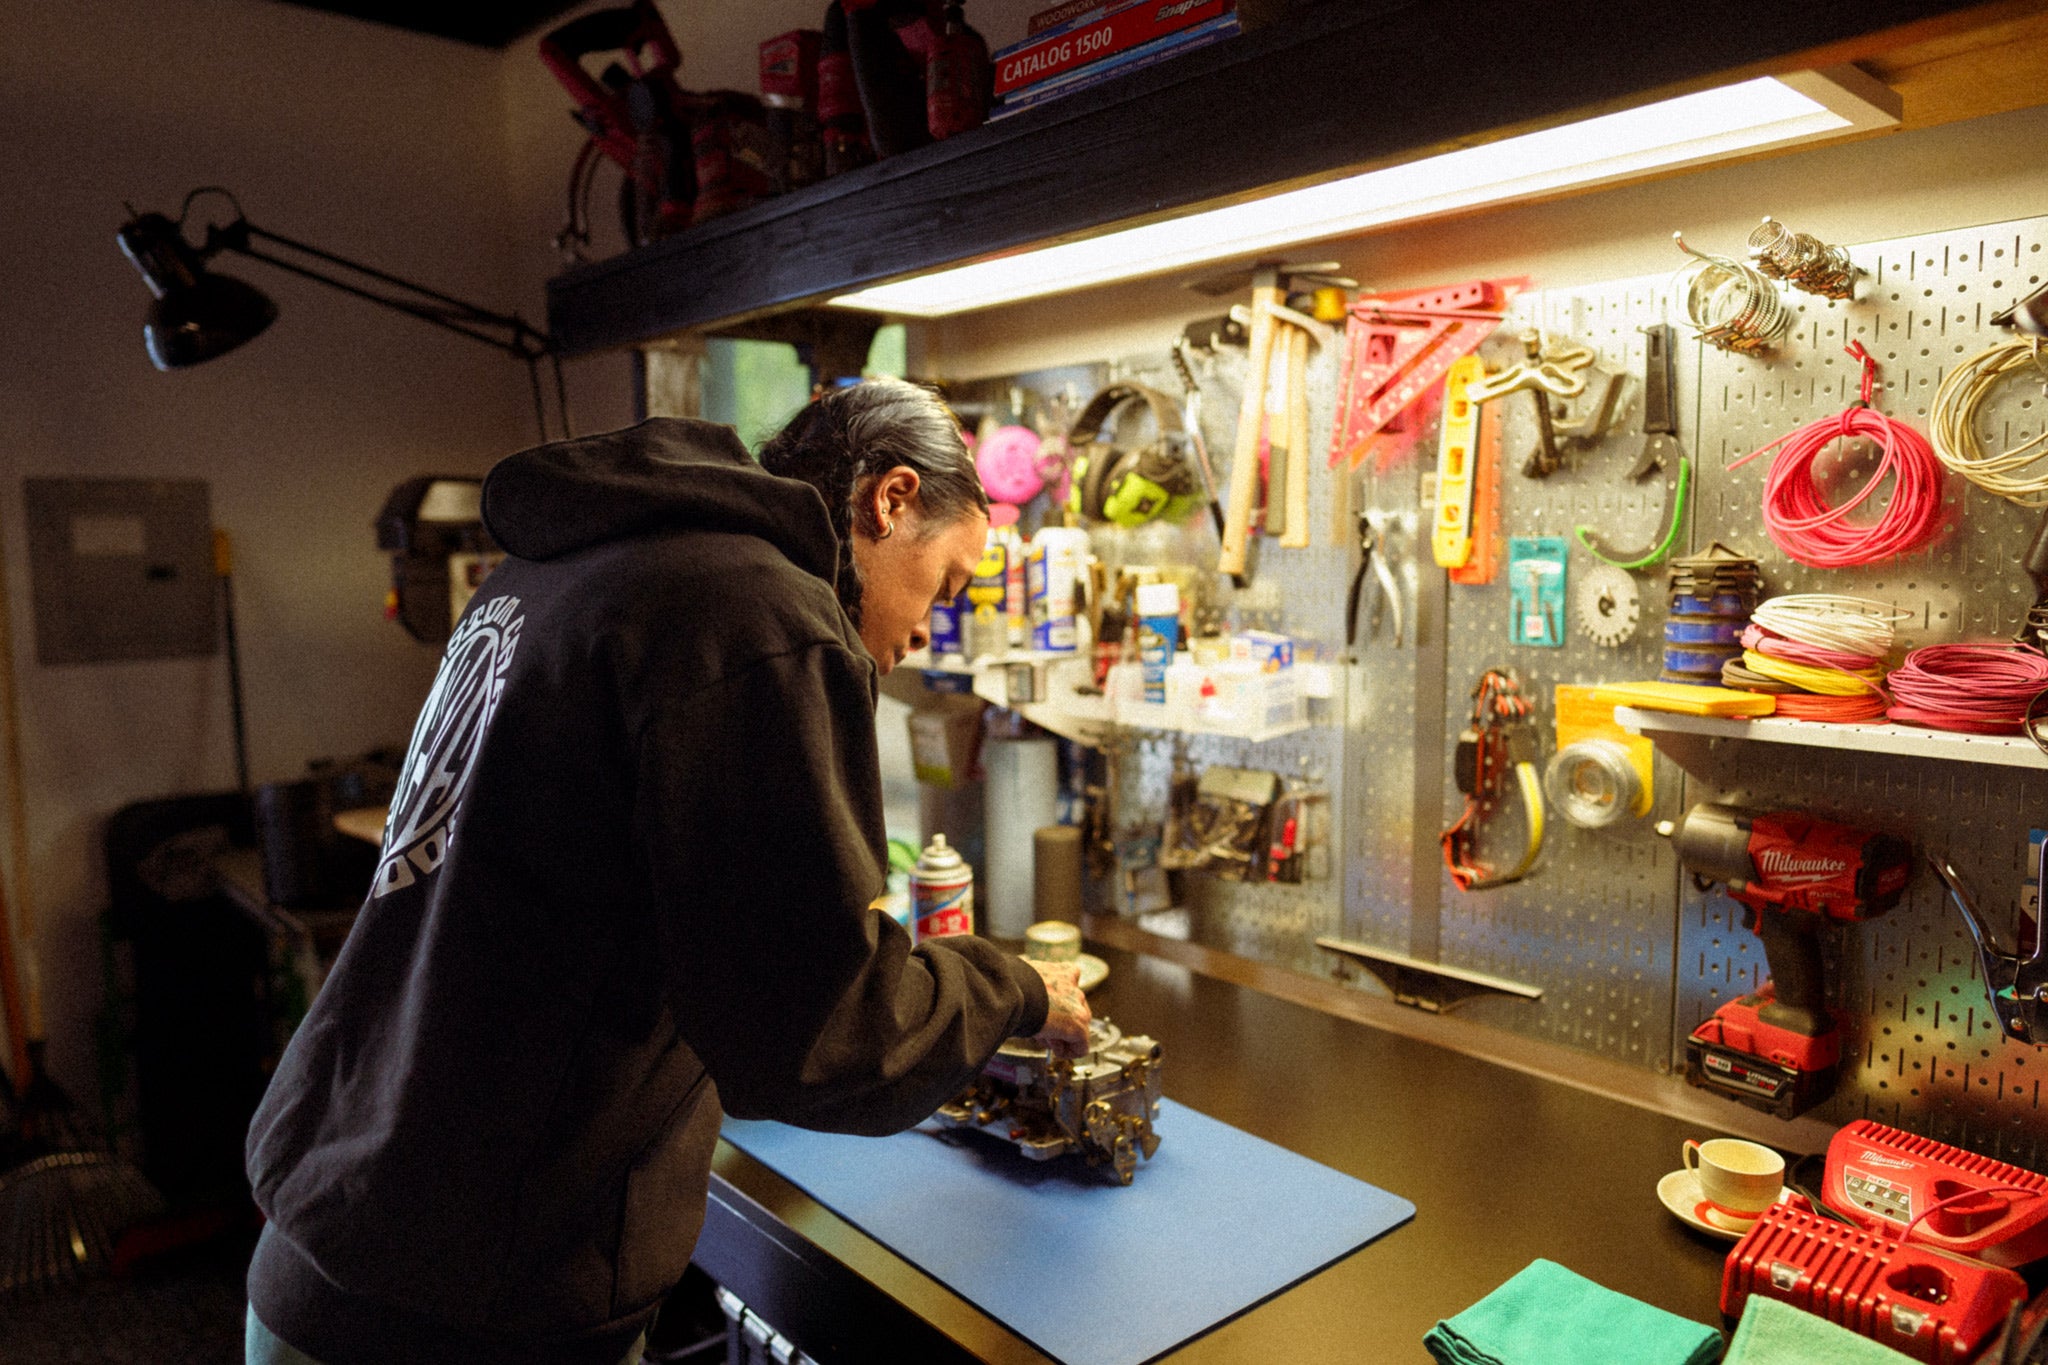 Mechanic at a workbench, rebuilding an Edelbrock carburetor